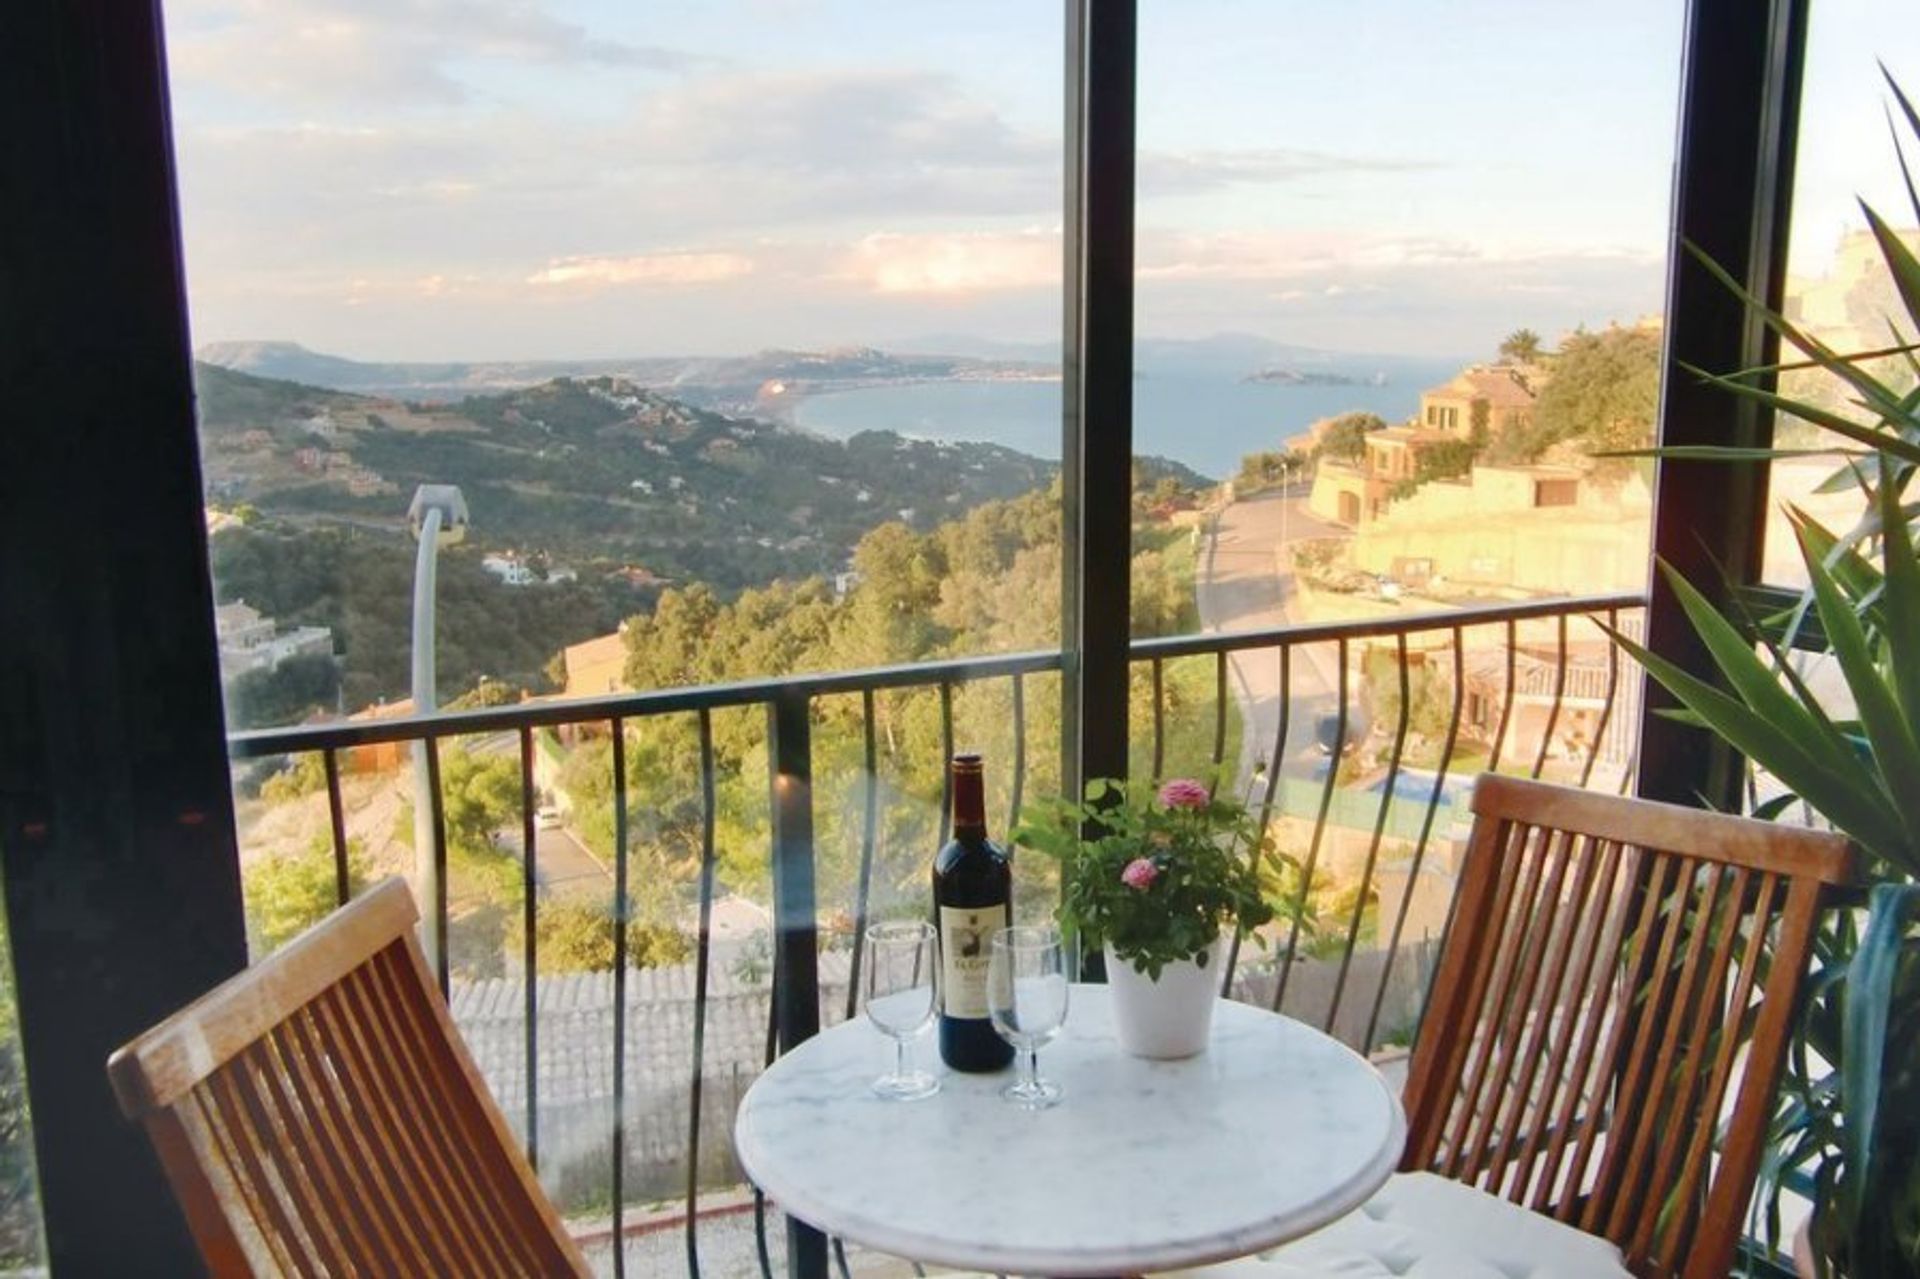 Feel the fresh mountain air from this luxury terraced villa overlooking the Costa Brava coast